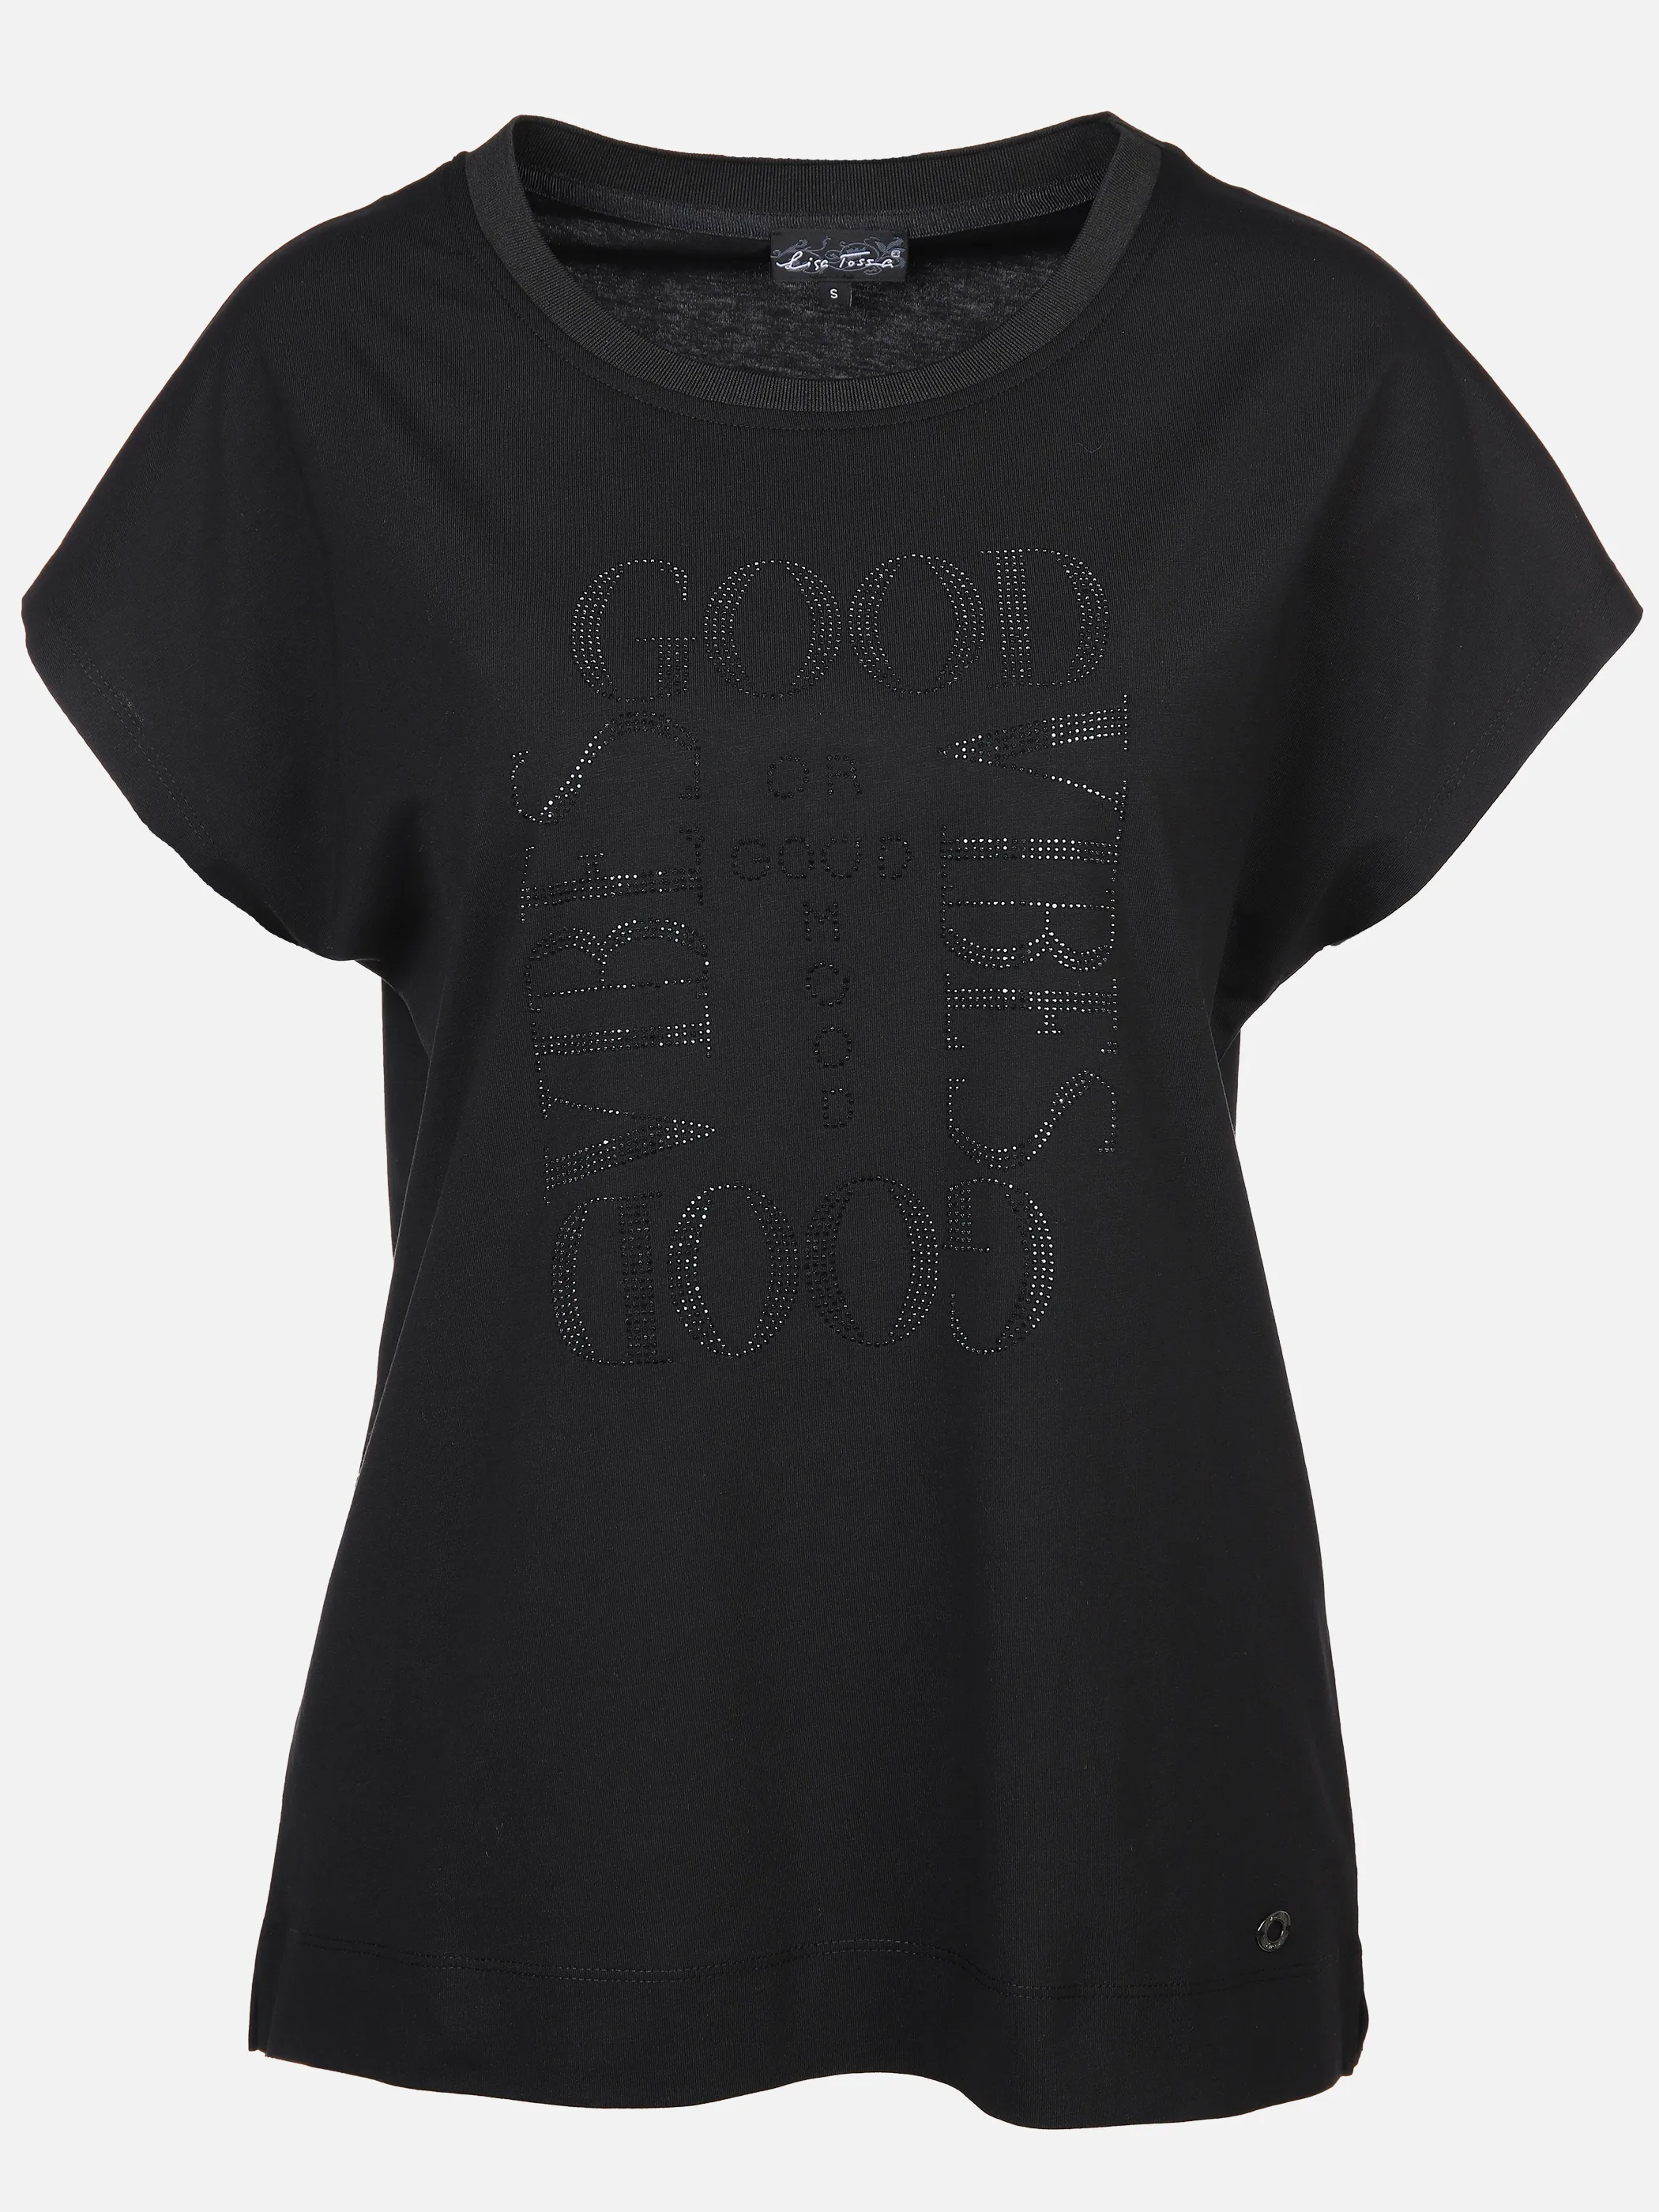 Lisa Tossa Da-T-Shirt m. Straßapplikation Schwarz 893032 BLACK 1